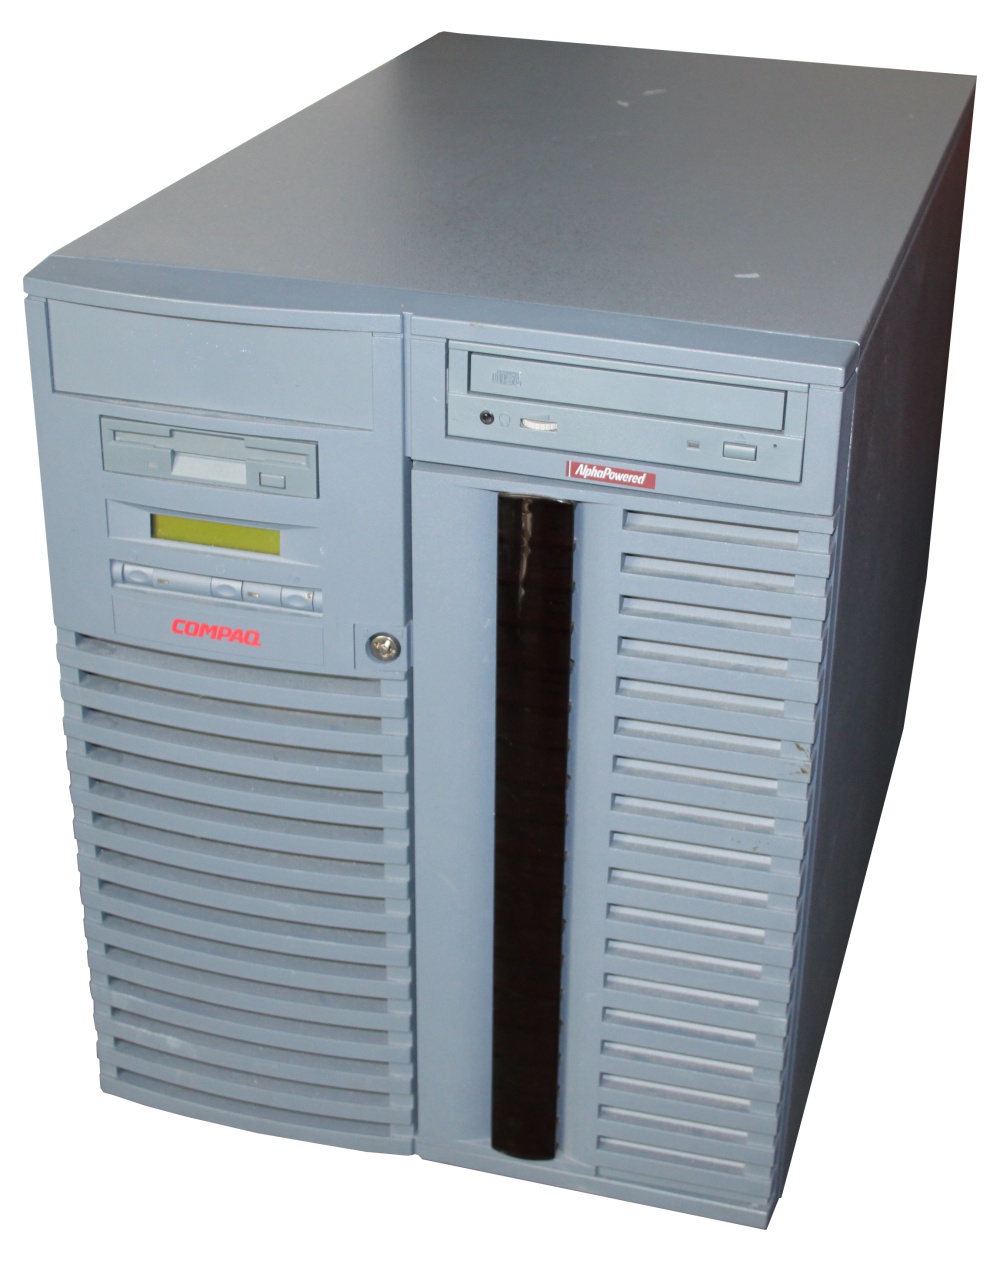 Compaq PC Computer 1997. Compaq ALPHASERVER. ALPHASERVER gs1280. Compaq Computer Corporation колонки.